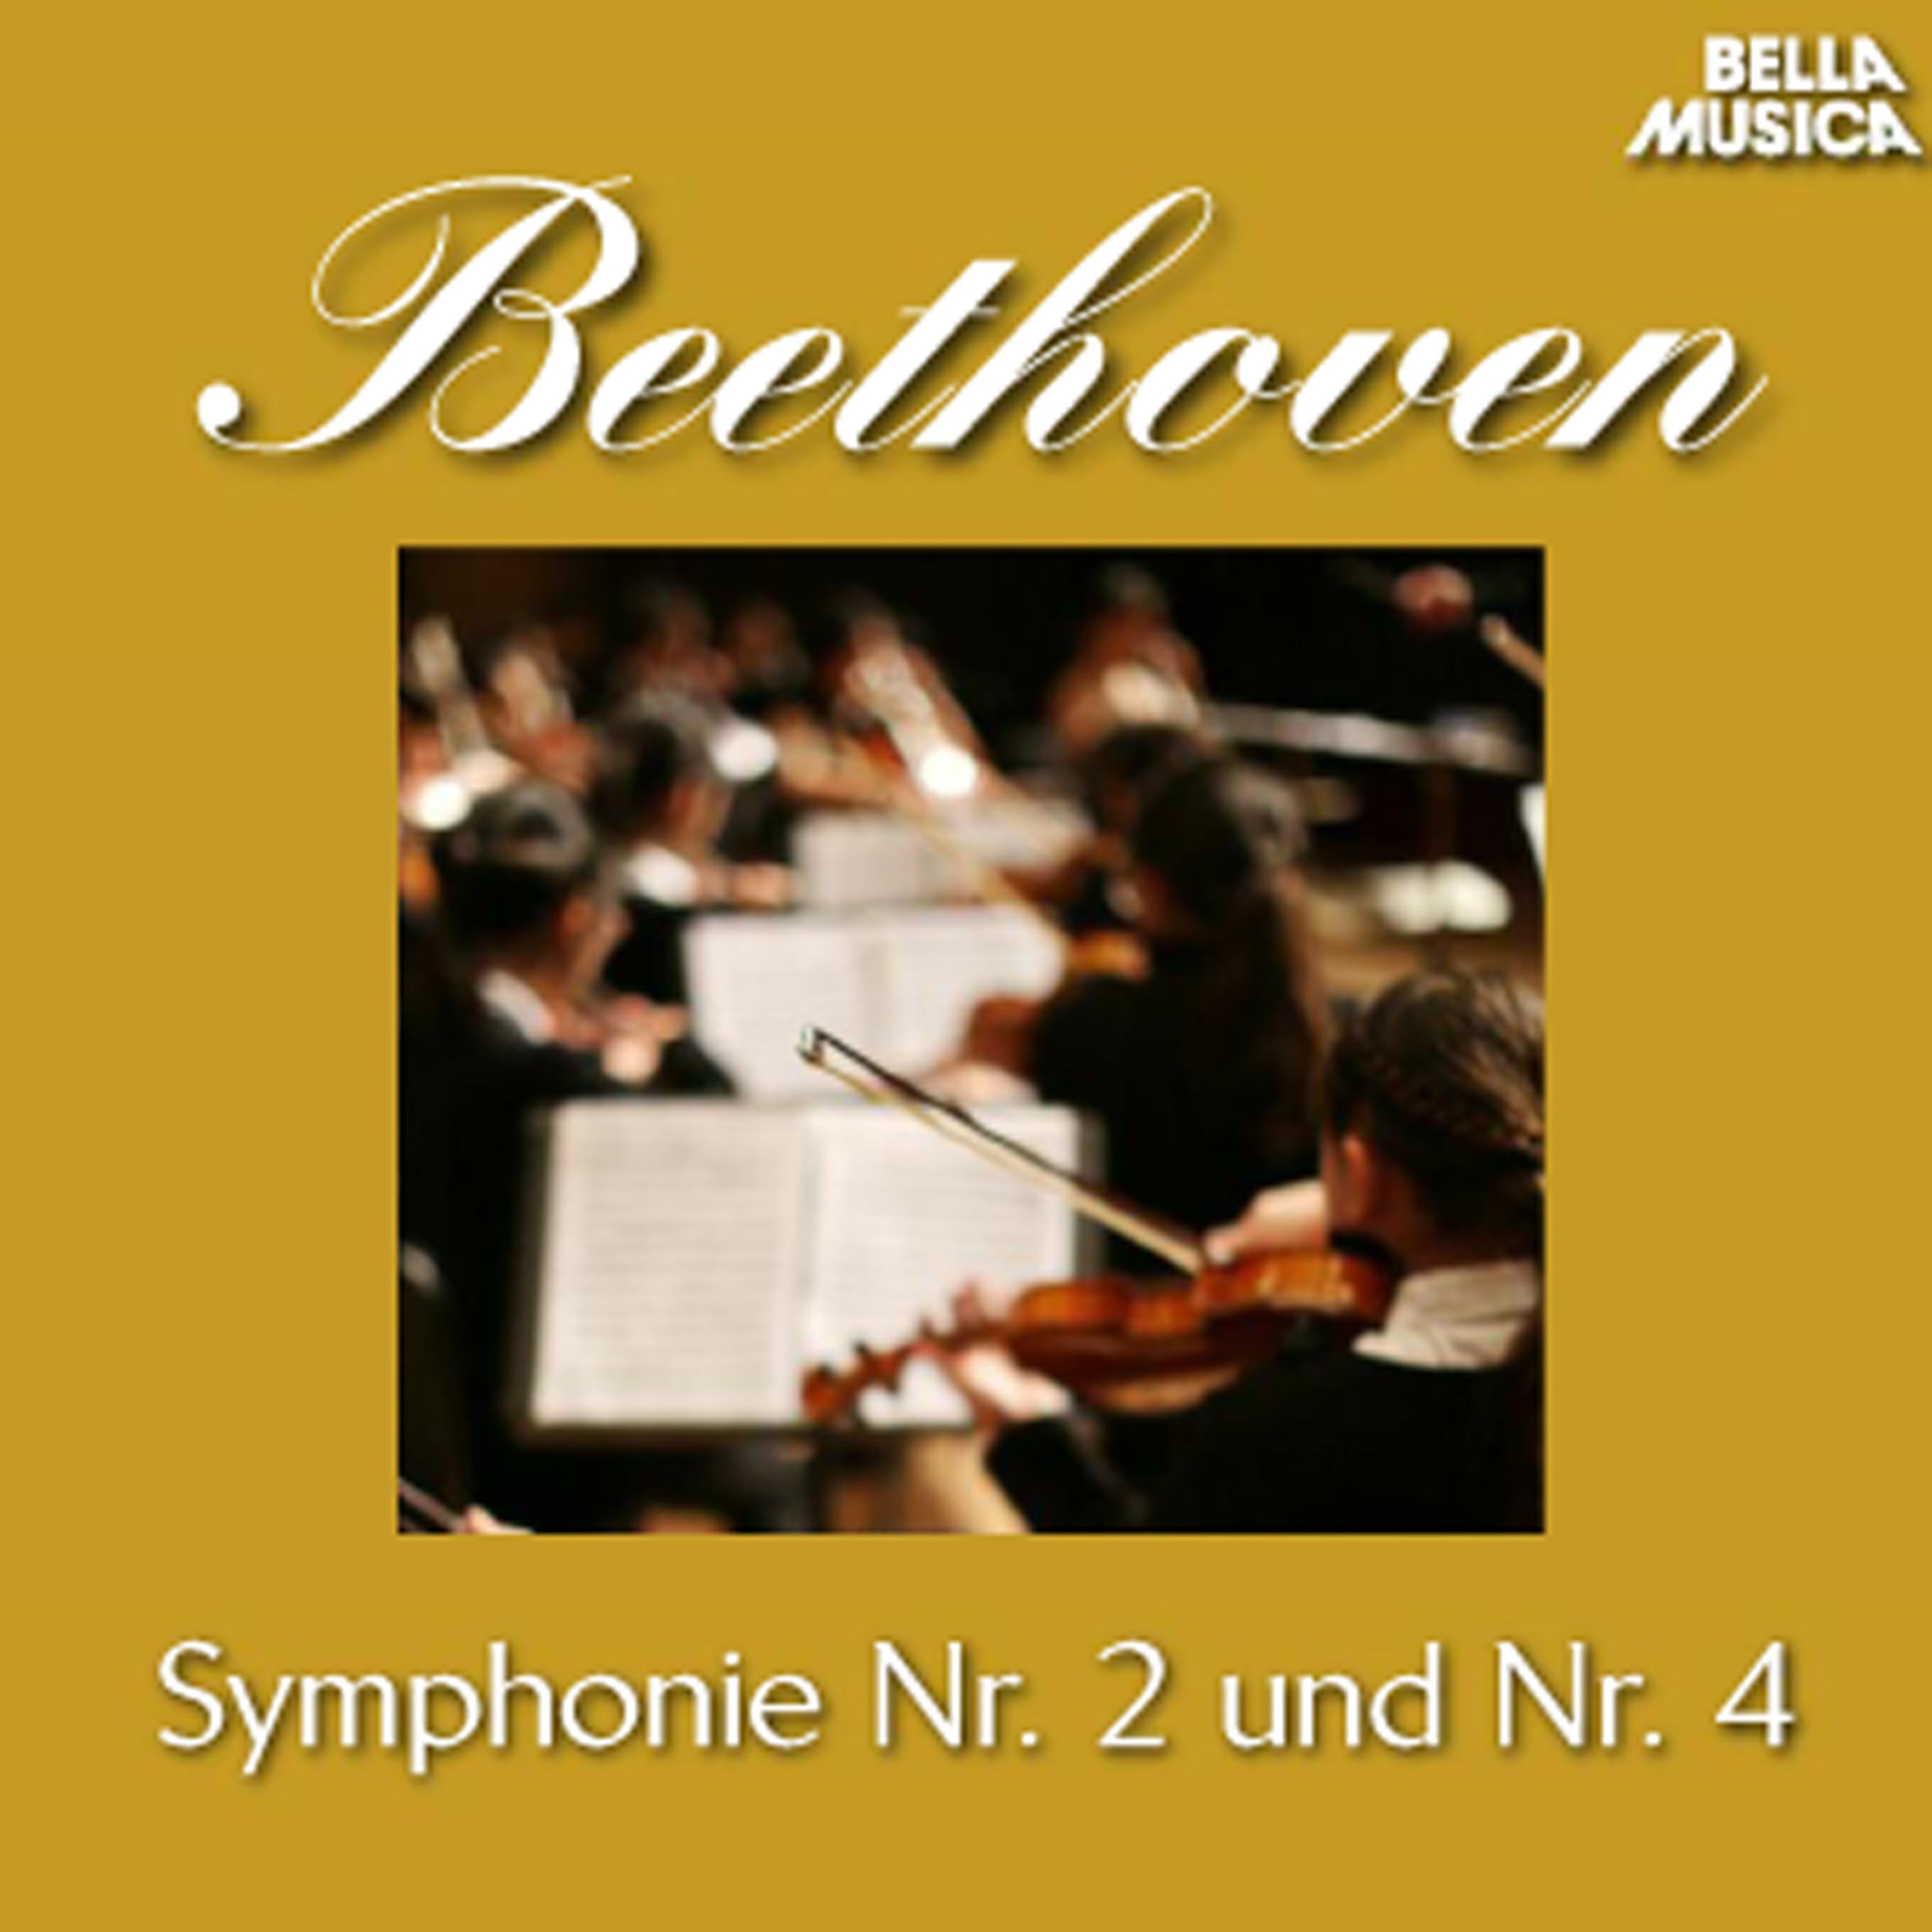 Sinfonie No. 4 fü r Orchester in BFlat Major, Op. 60: IV. Allegro ma non troppo